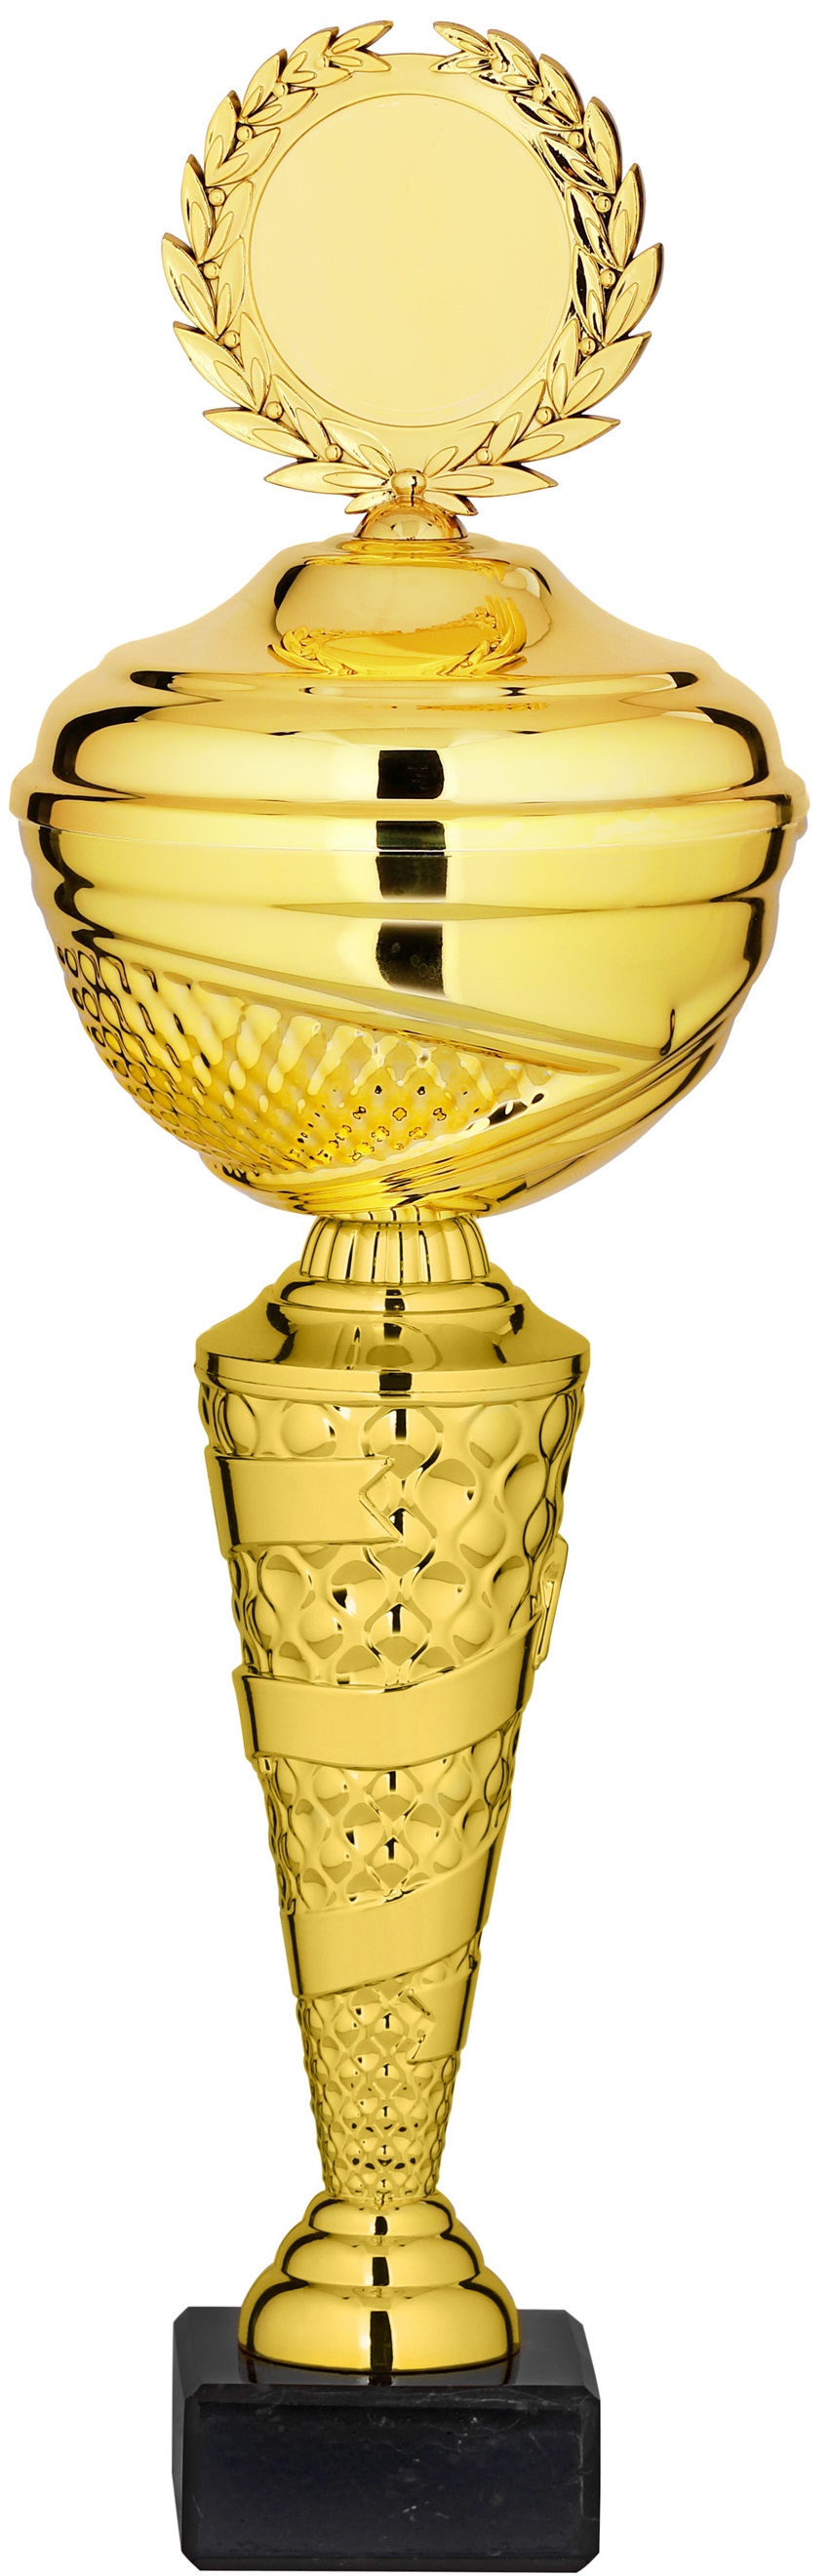 Pokal P600-Gold  inkl. Gravur und Emblem 45,5 cm